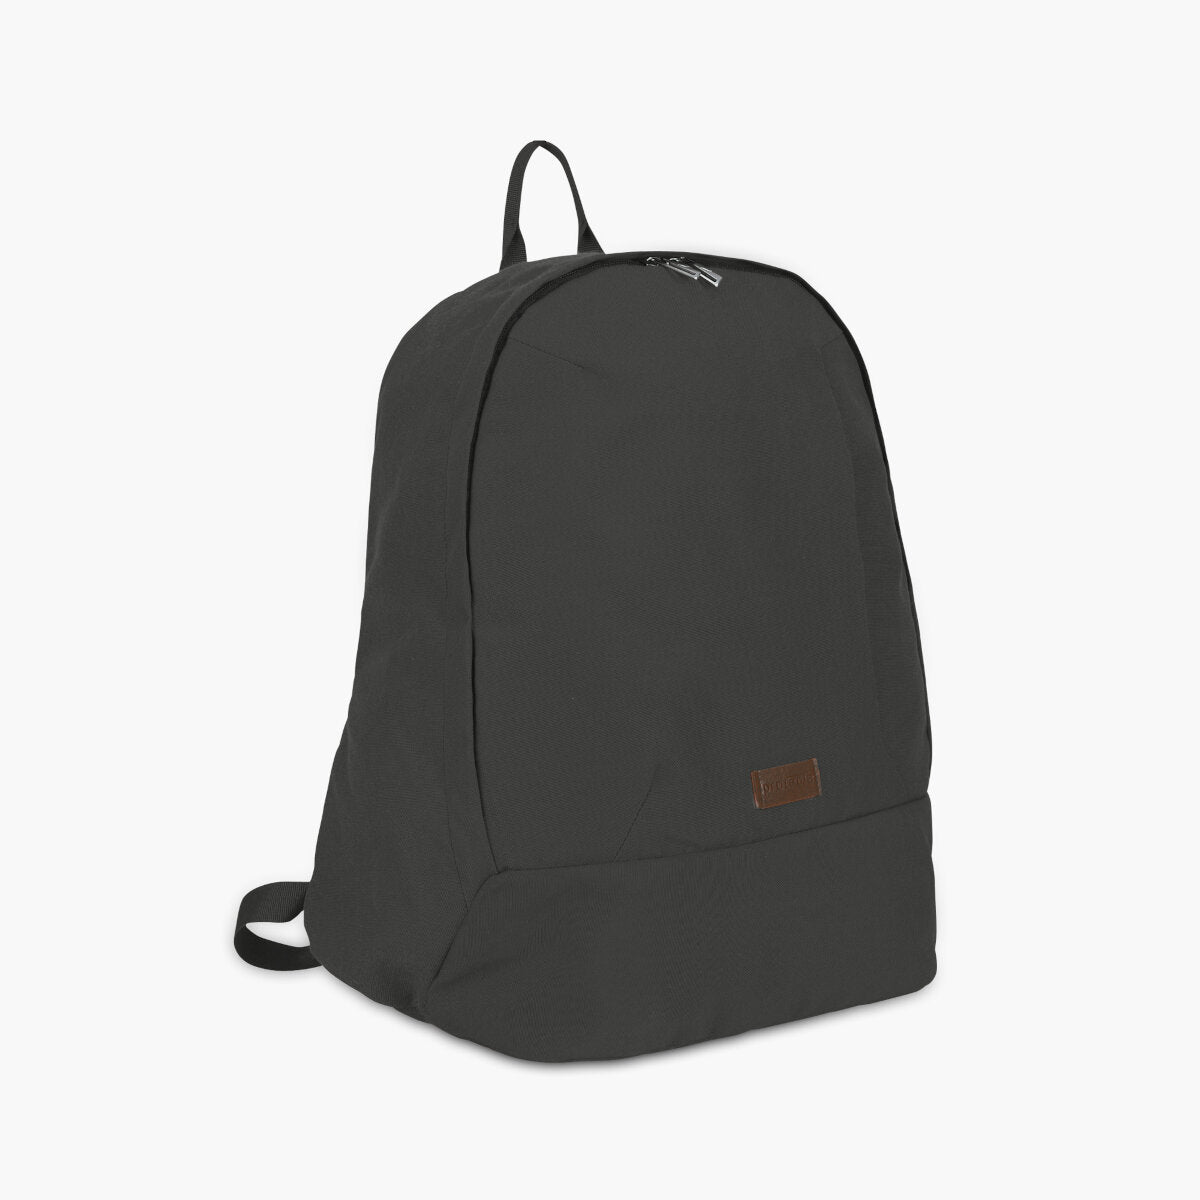 Green | Protecta Steady Progress Laptop Backpack - 4